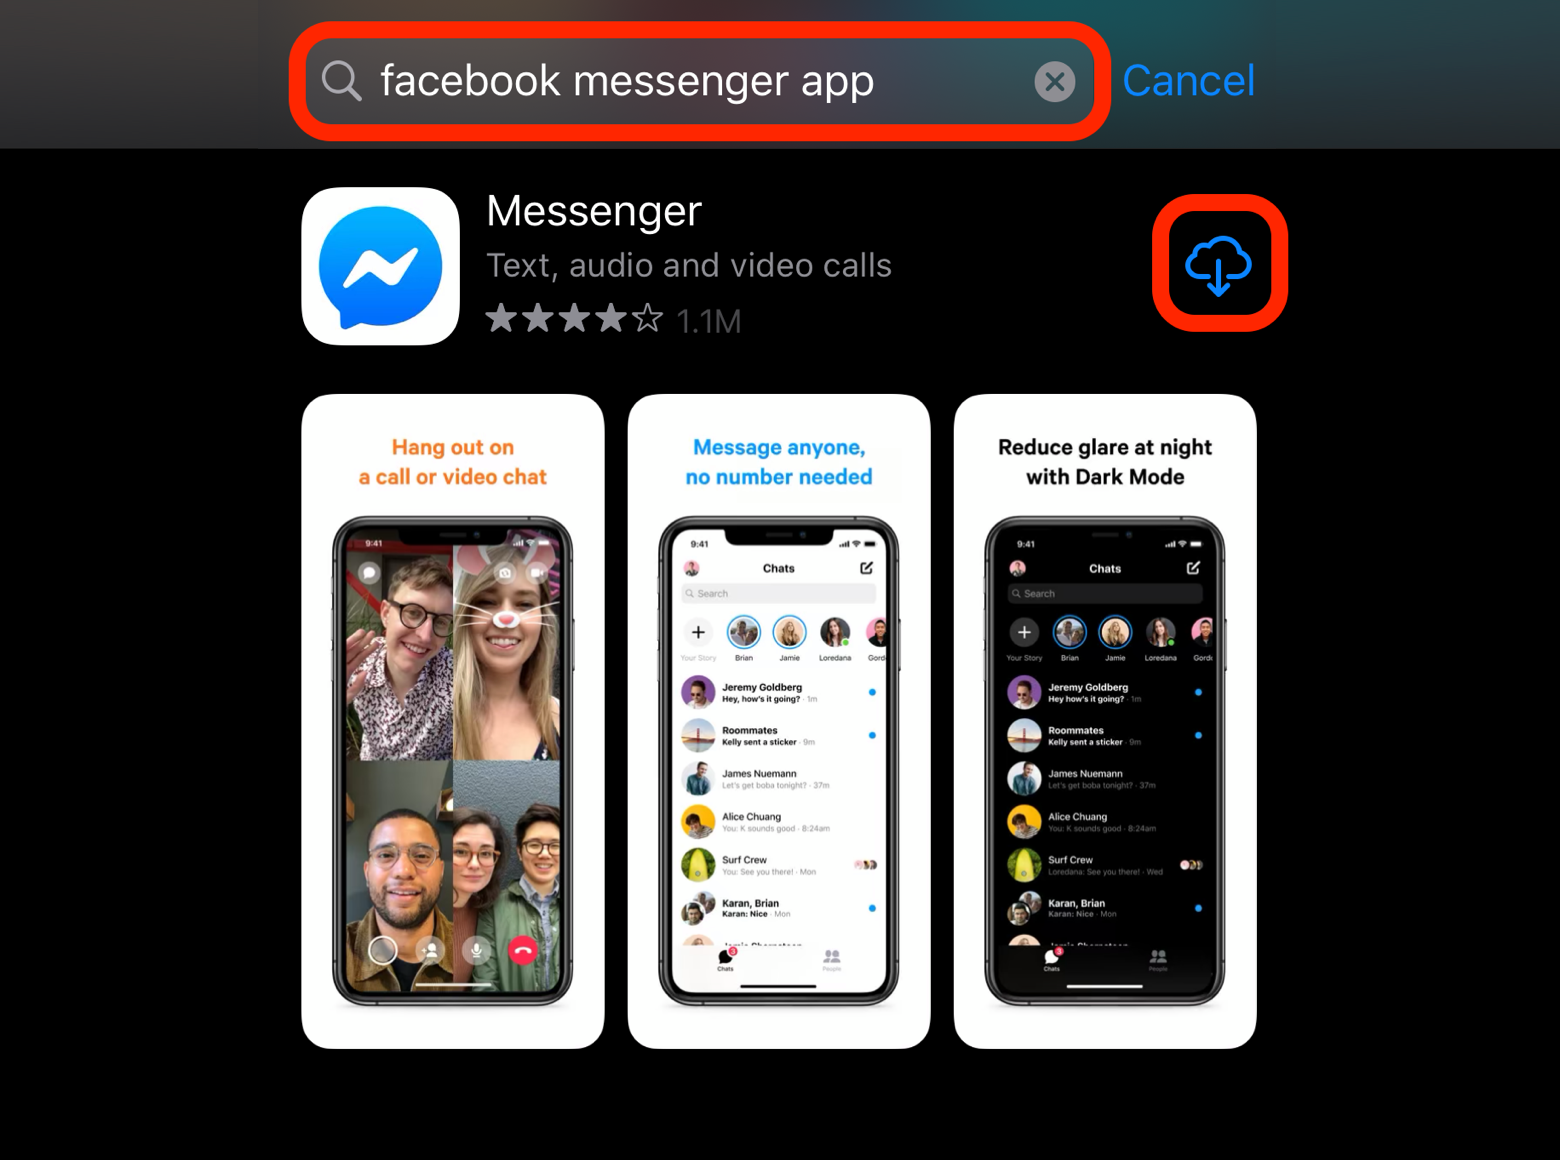 can a mac desktop use facebook messenge for video calls?